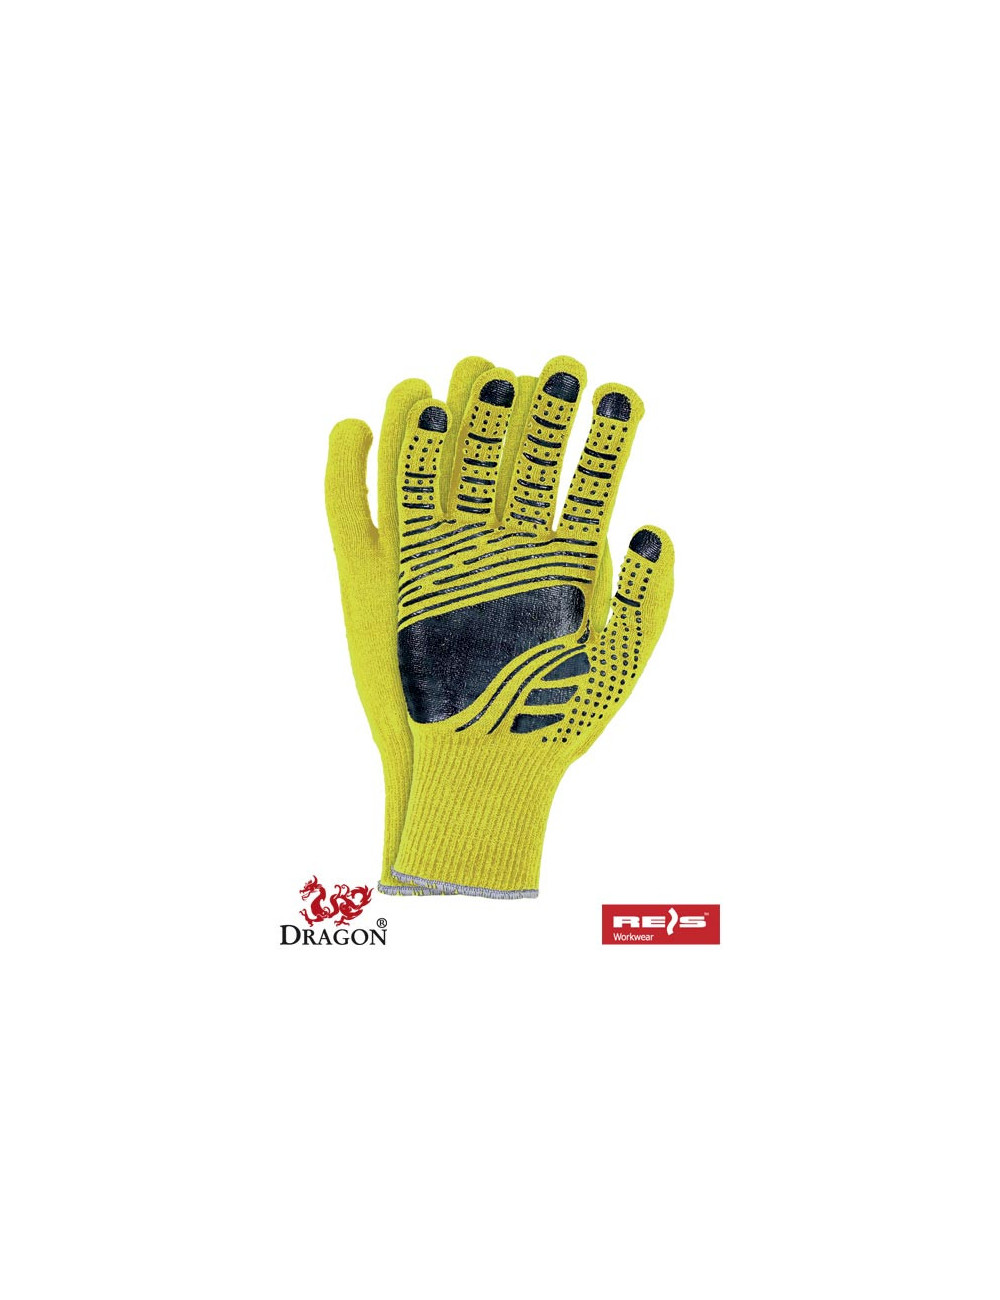 Protective gloves floatex-neo yb yellow-black Reis